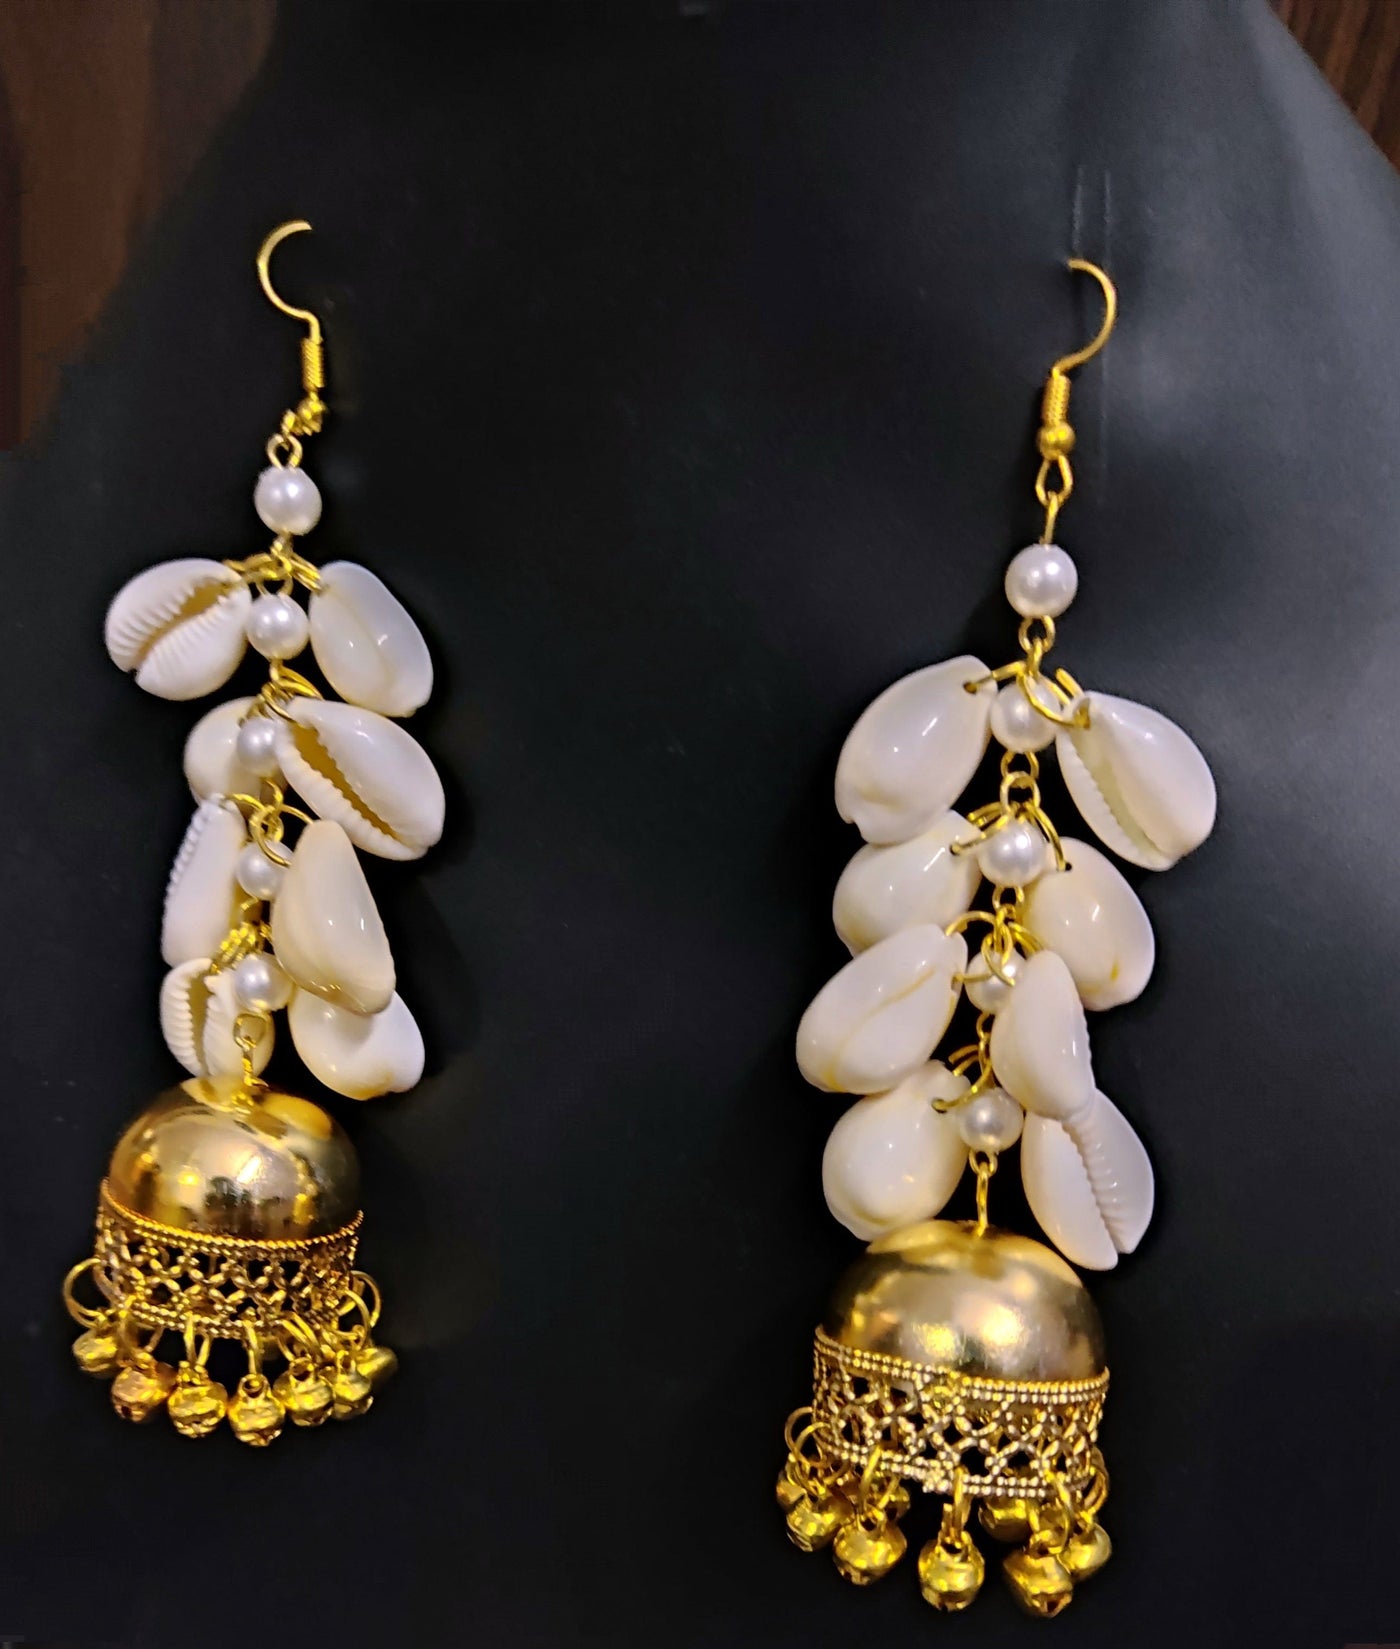 LAMANSH shells jhumki earrings White Gold / Standard / Jhumki Style LAMANSH® Modern Shells 🐚 Collection Earrings set in Jhumki style